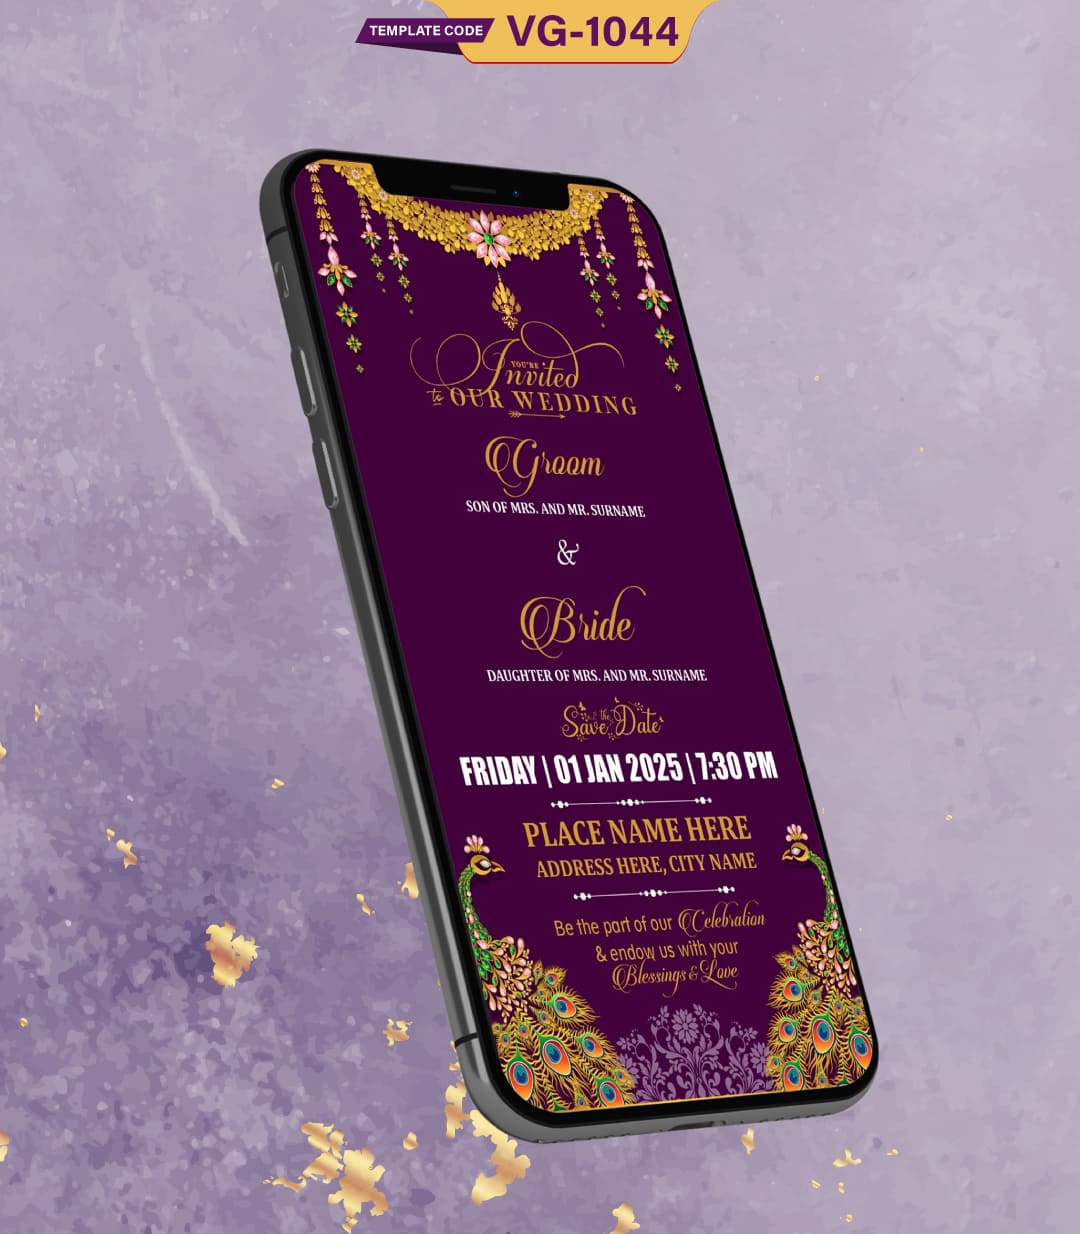 Digital Wedding Invitation ecards